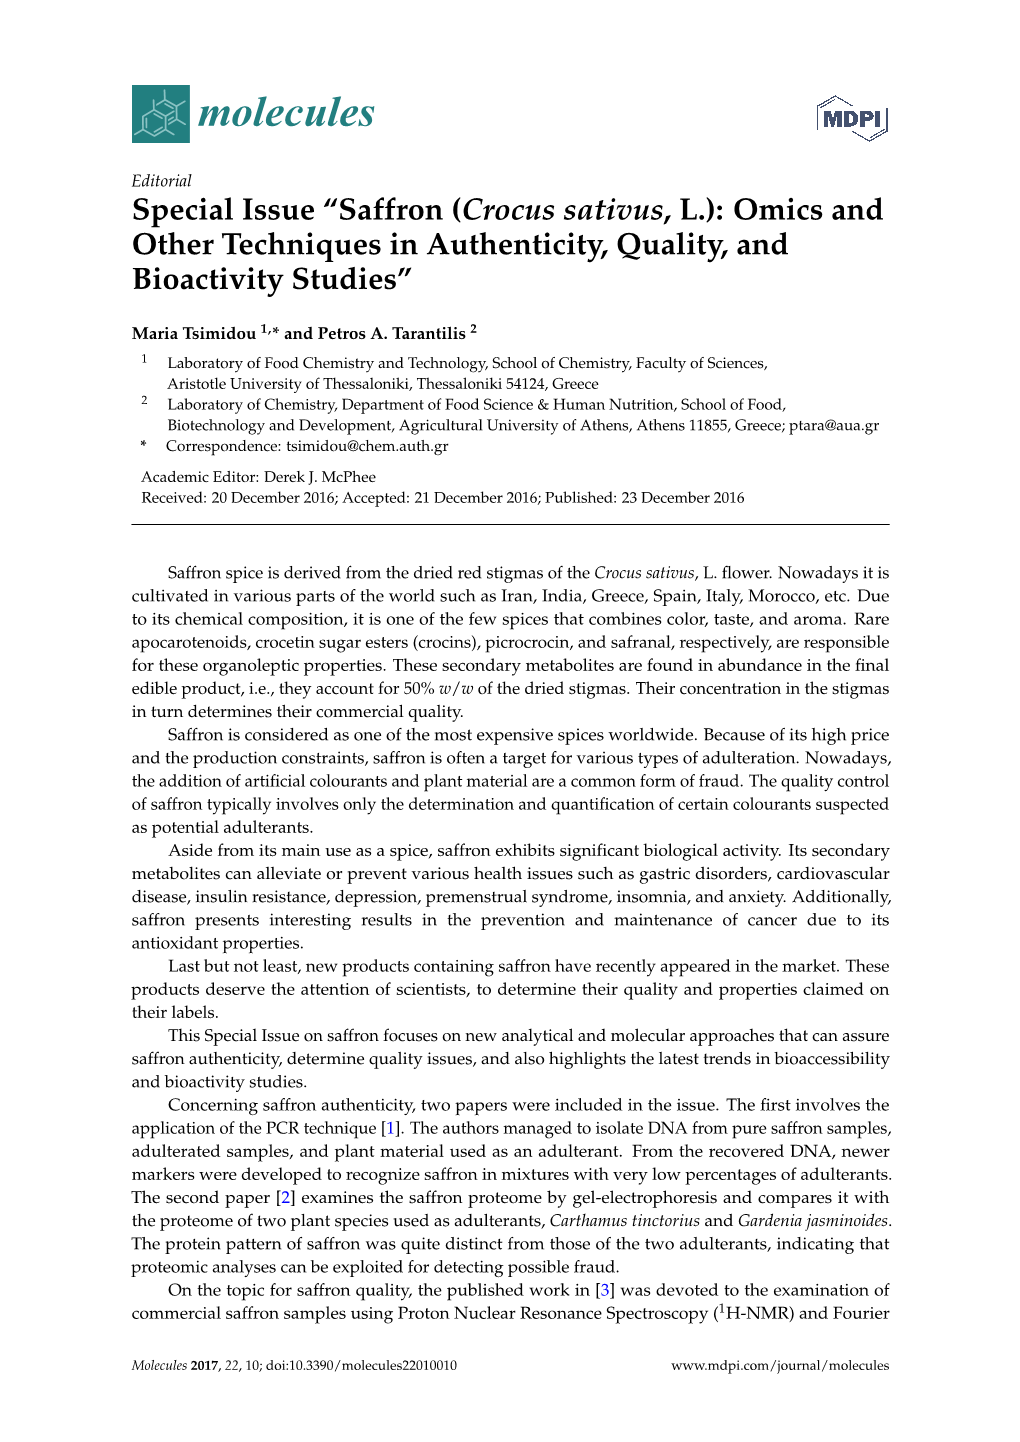 Saffron (Crocus Sativus, L.): Omics and Other Techniques in Authenticity, Quality, and Bioactivity Studies”